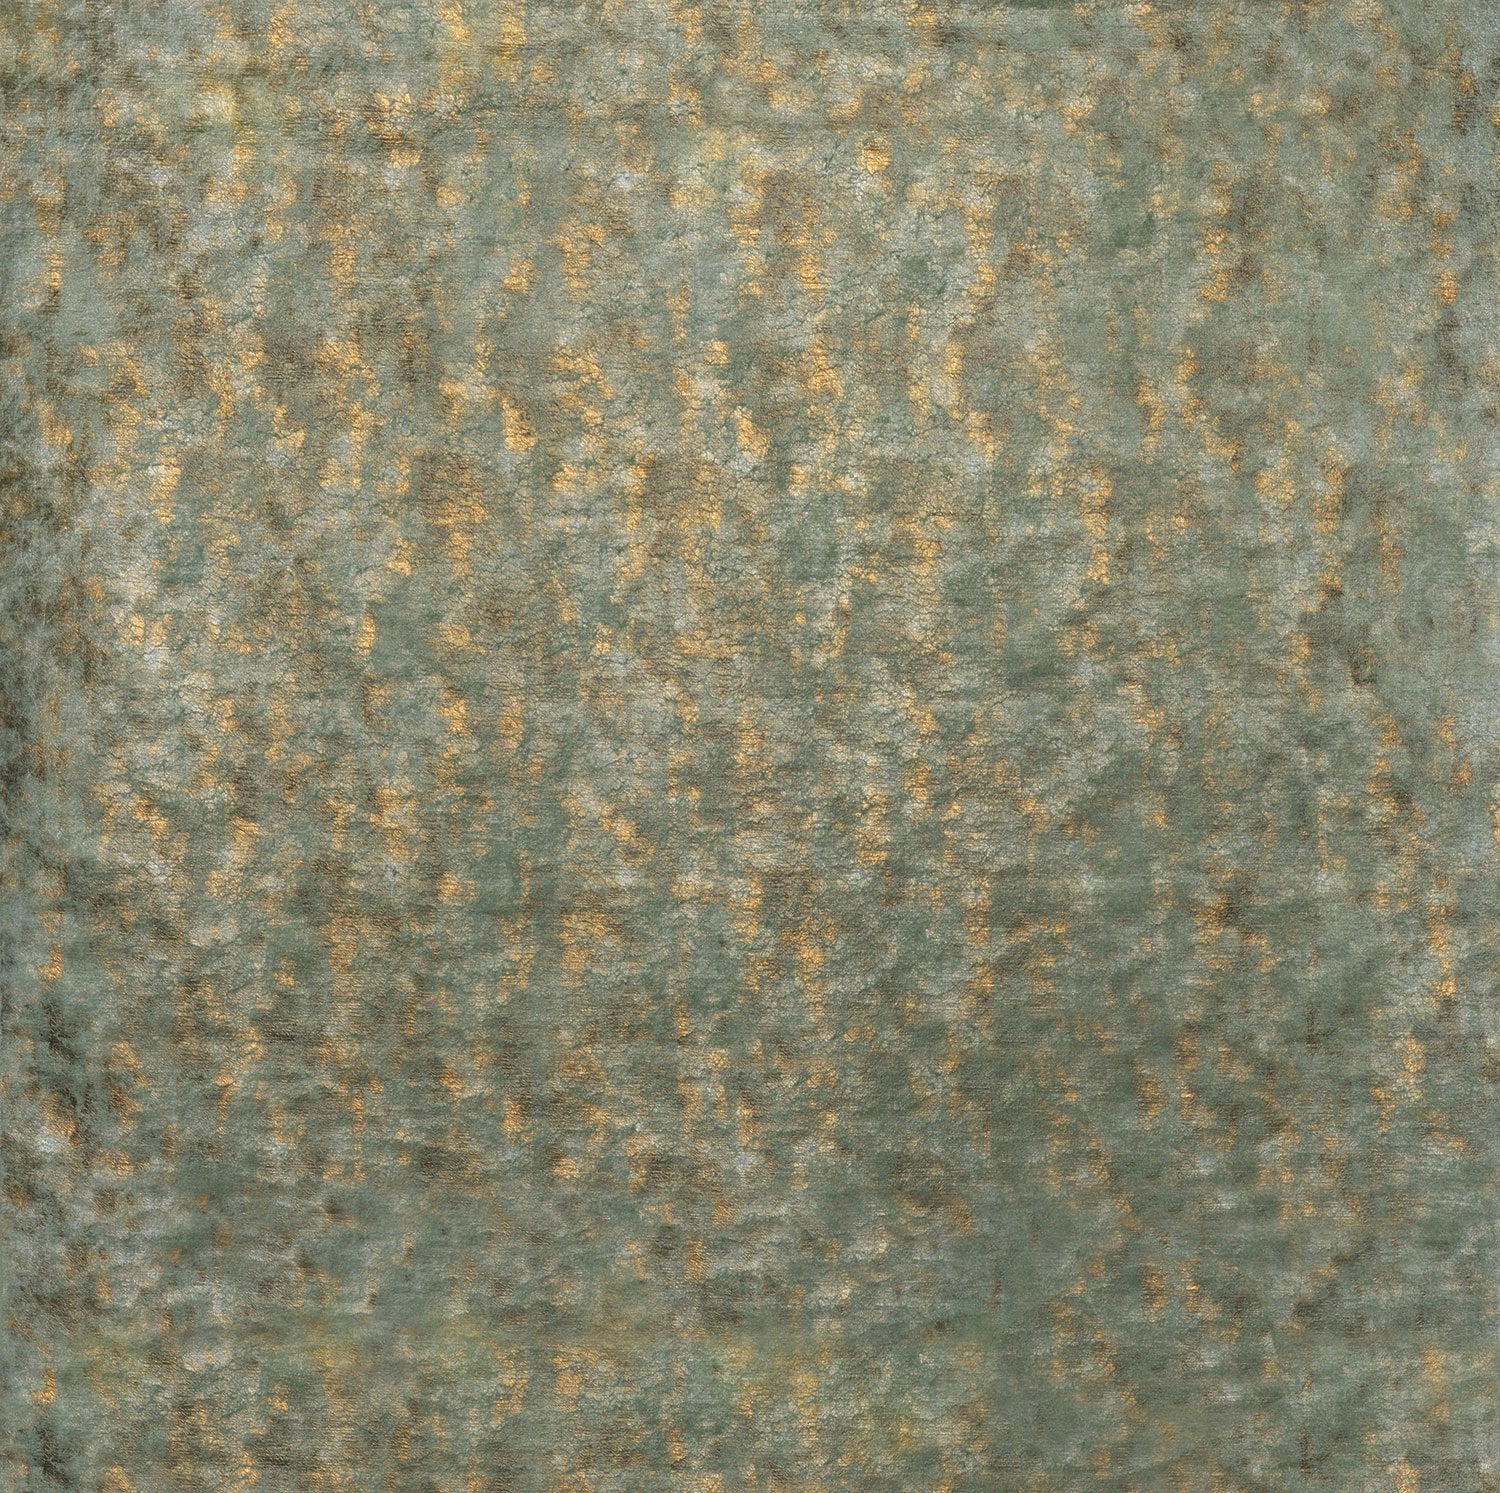 Nina Campbell Fabric - Gioconda Duccio Eucalyptus/Gold NCF4253-06